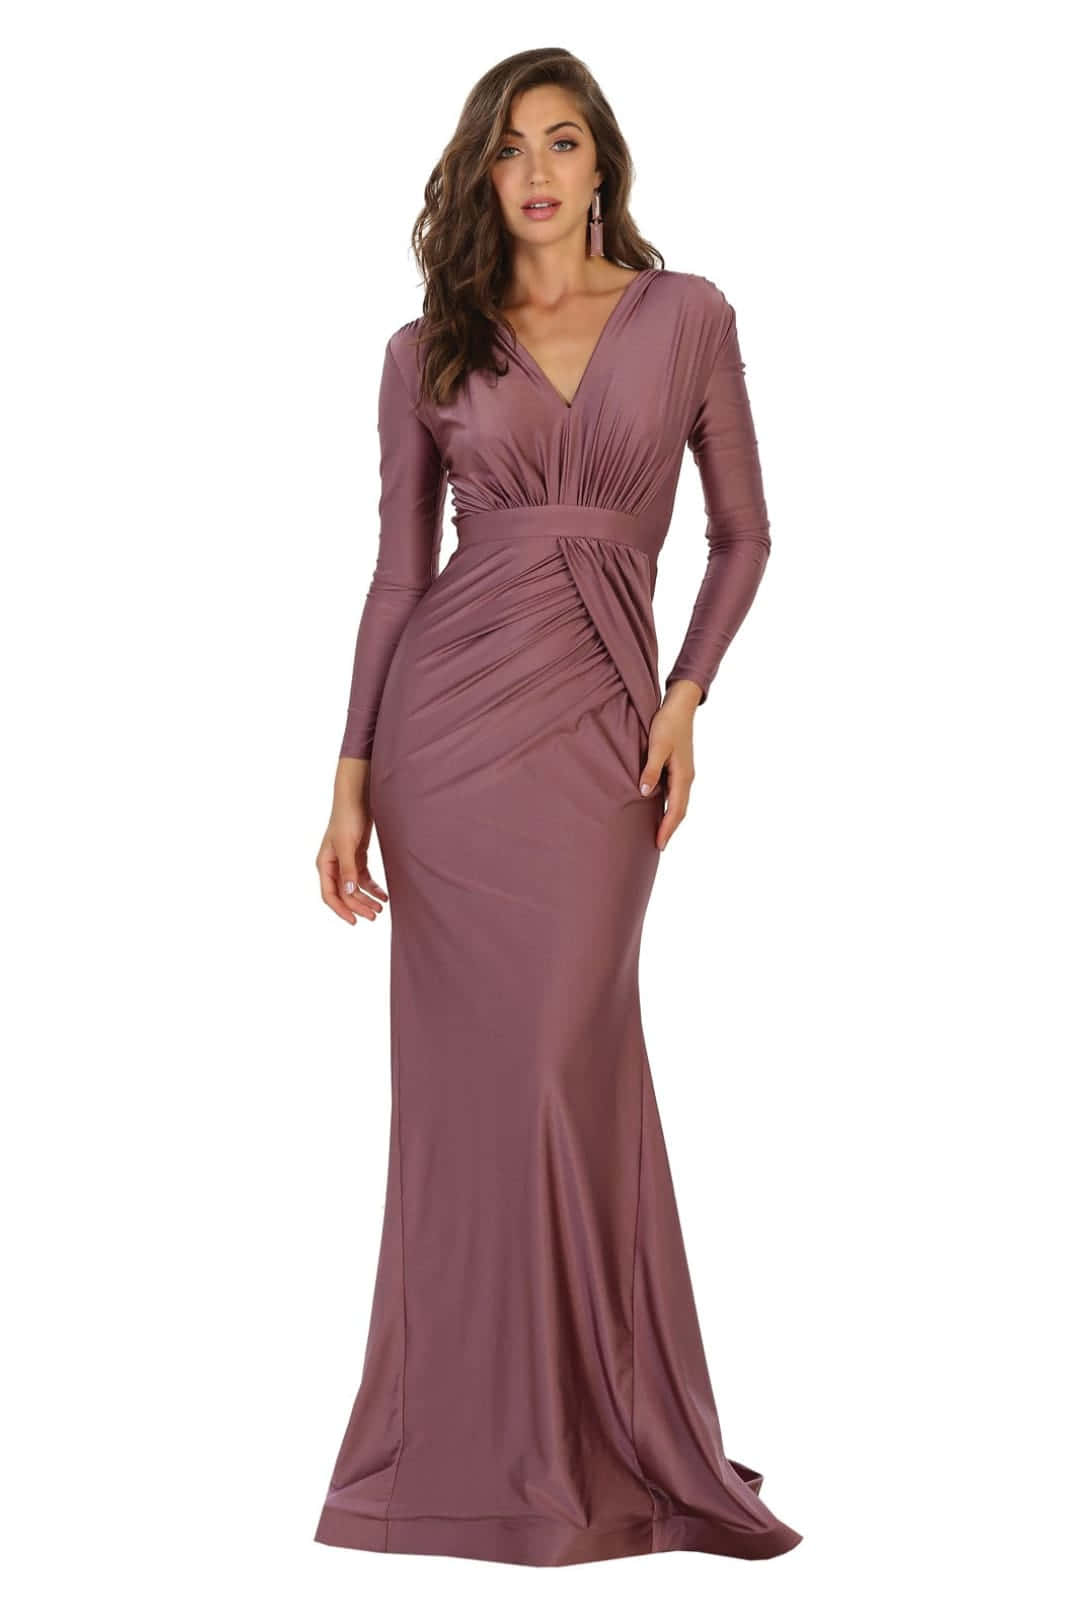 Model In A Light Purple Sleeved Long Dress Picture